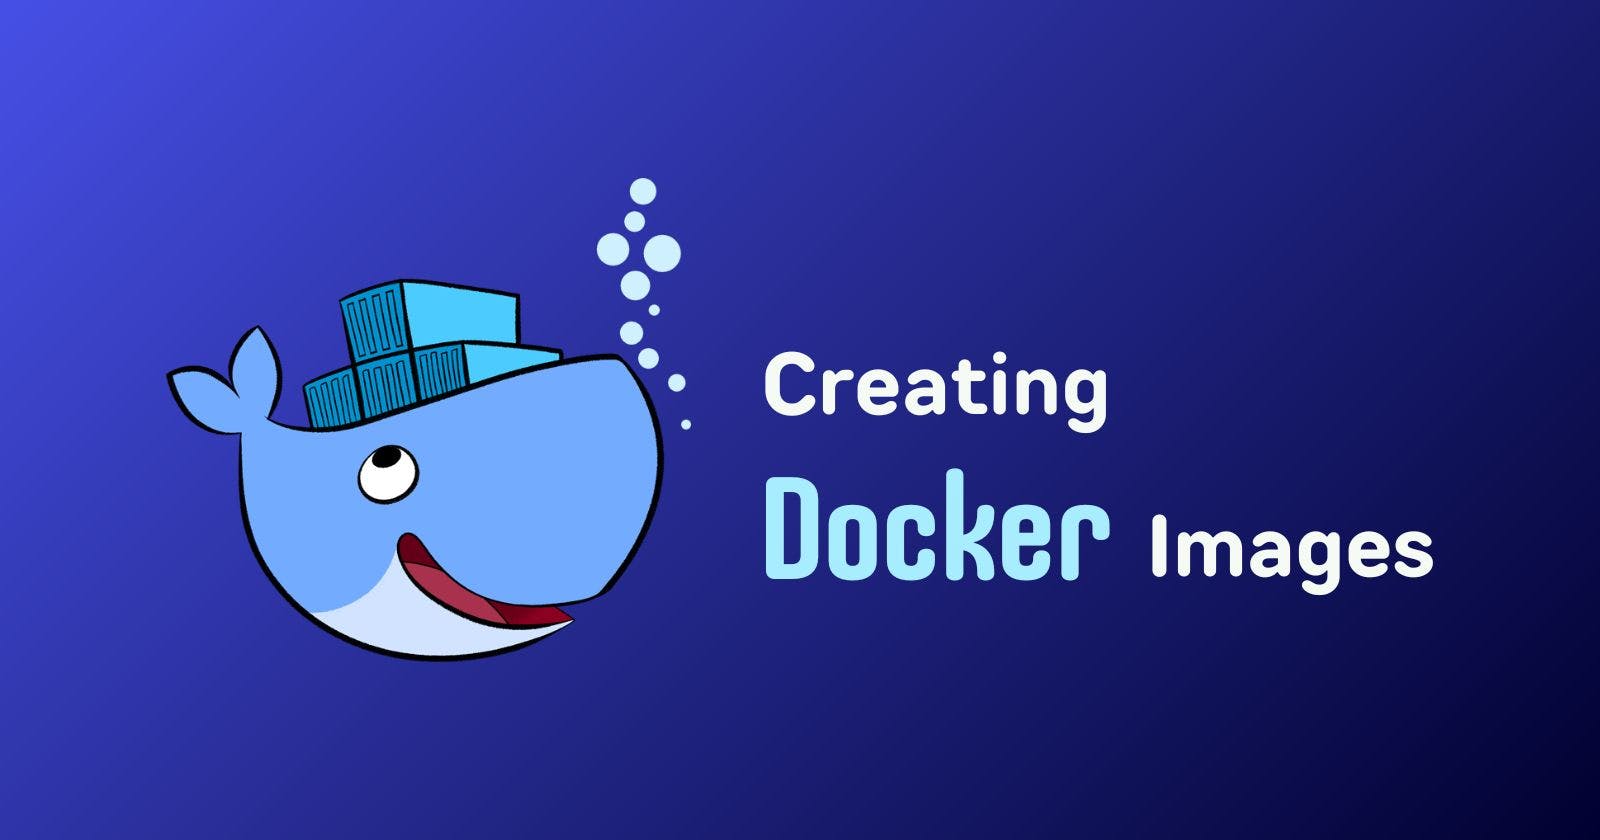 Creating Docker images